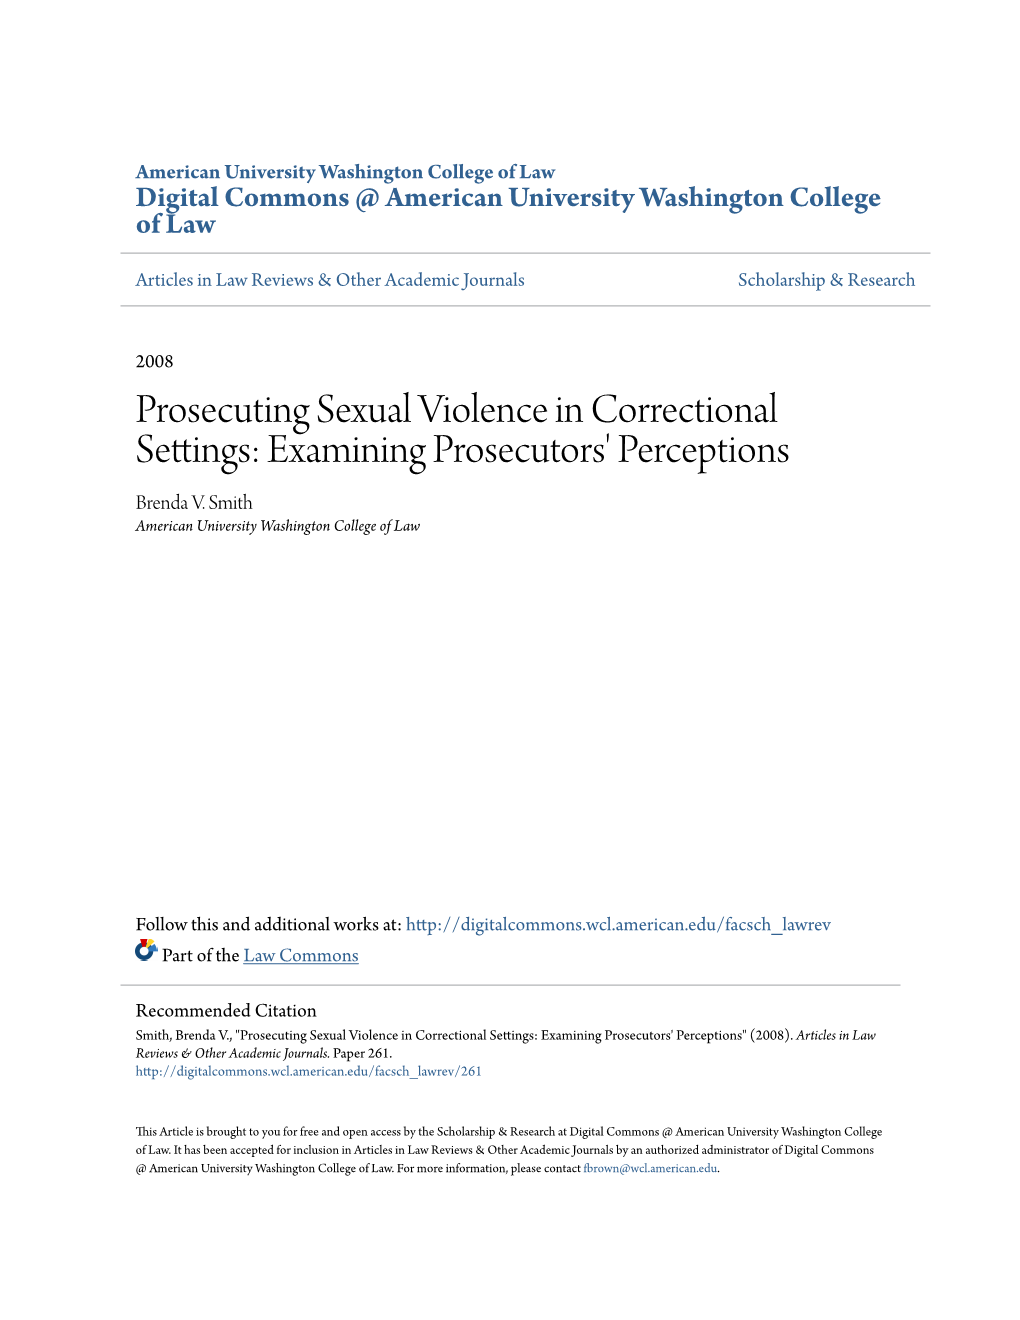 Prosecuting Sexual Violence in Correctional Settings: Examining Prosecutors' Perceptions Brenda V